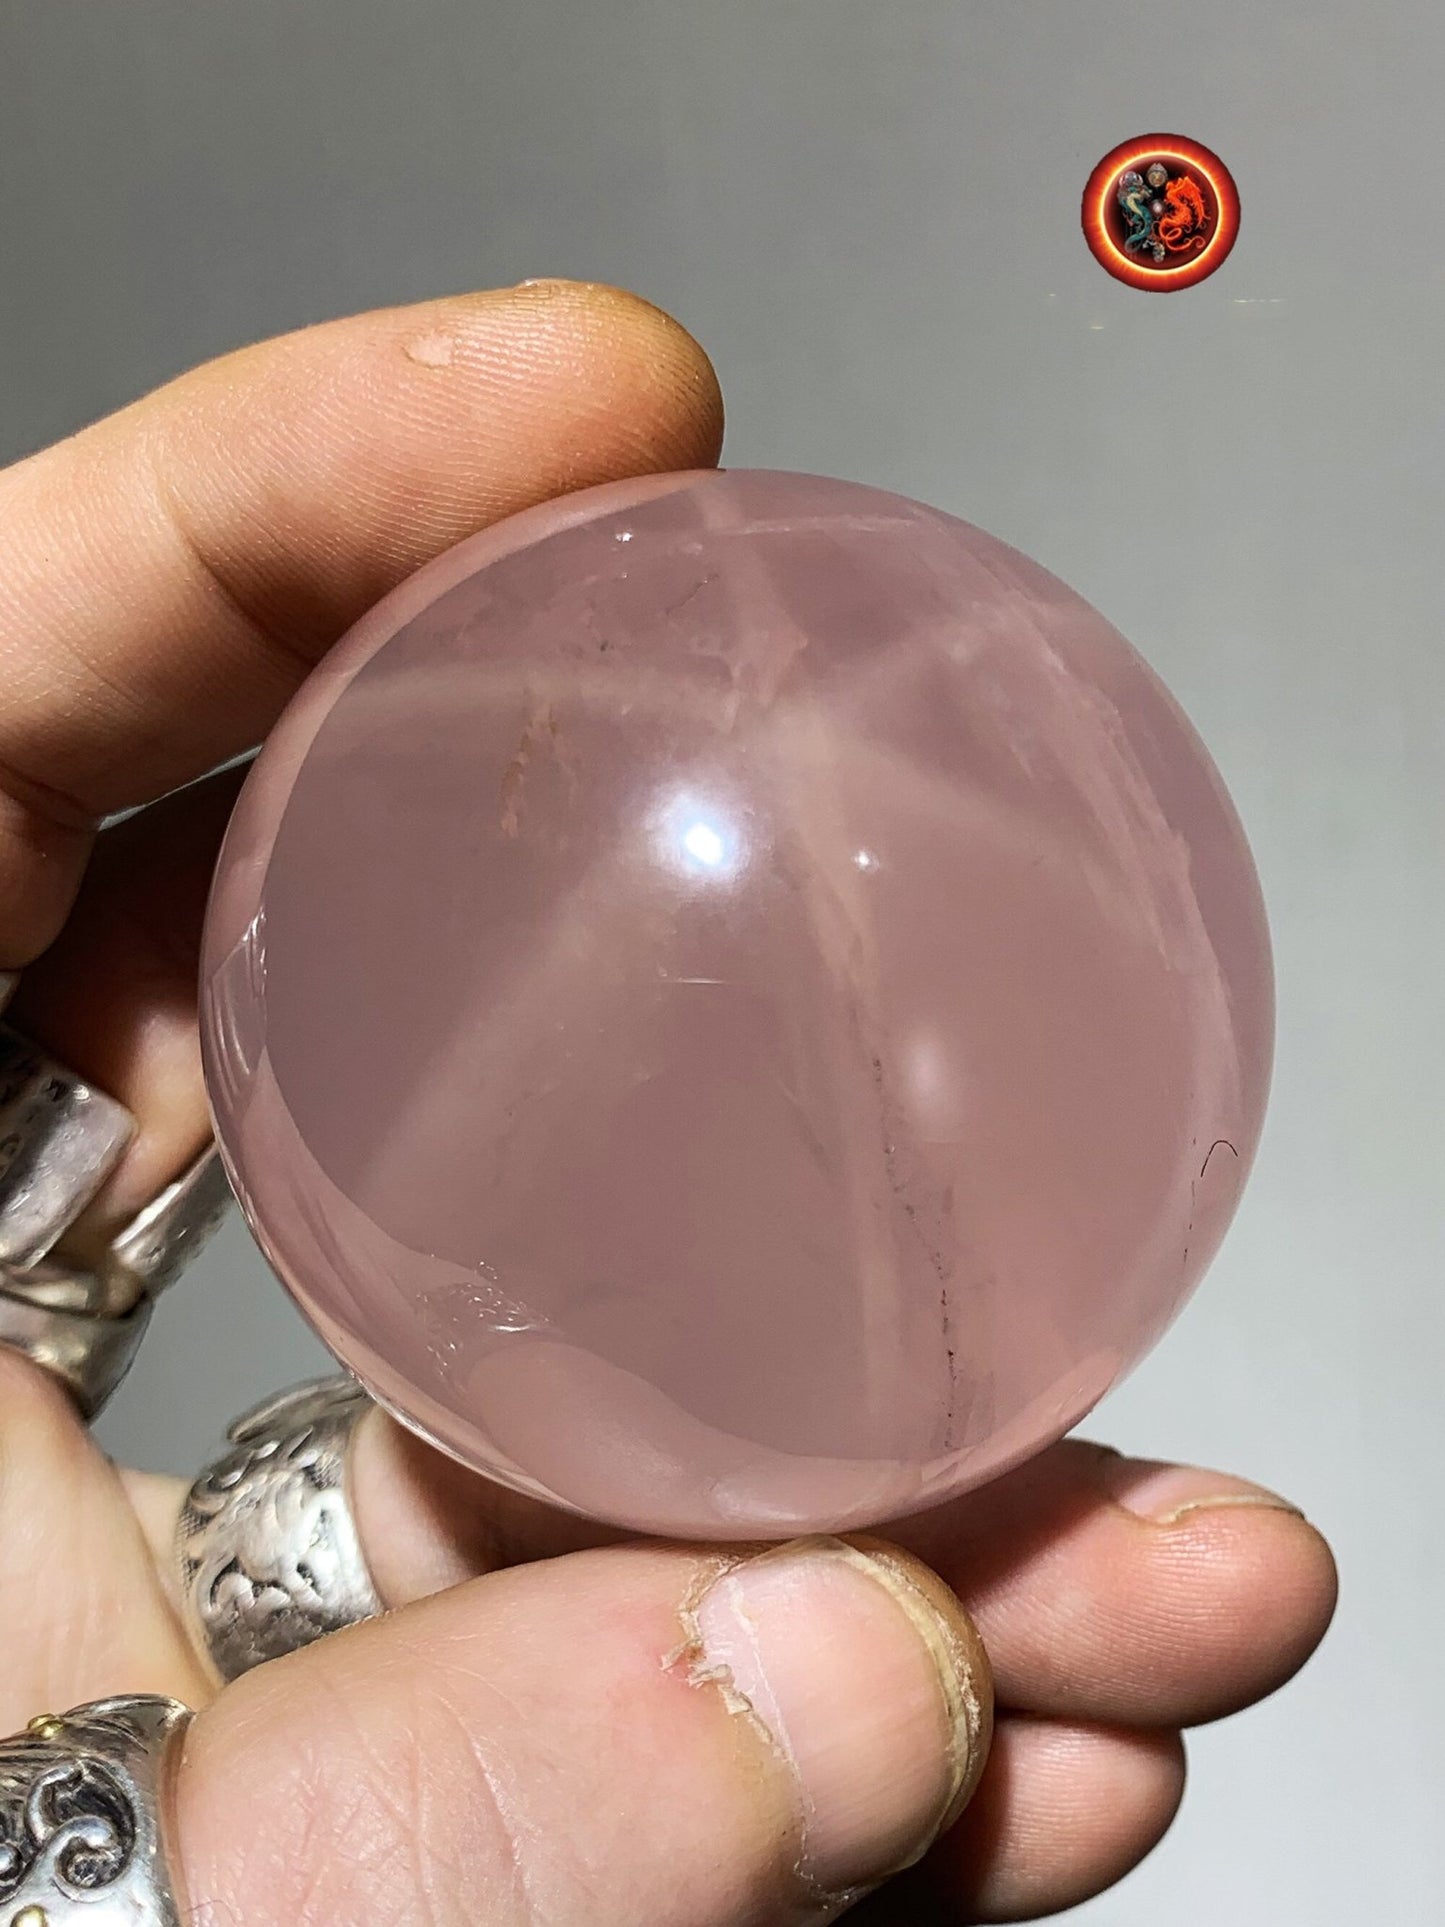 Sphère, quartz rose étoilé, quartz rose astérié ou quartz rose astérisé. Provenance du Mozambique. quartz rose naturel. 59mm de diamètre - obsidian dragon